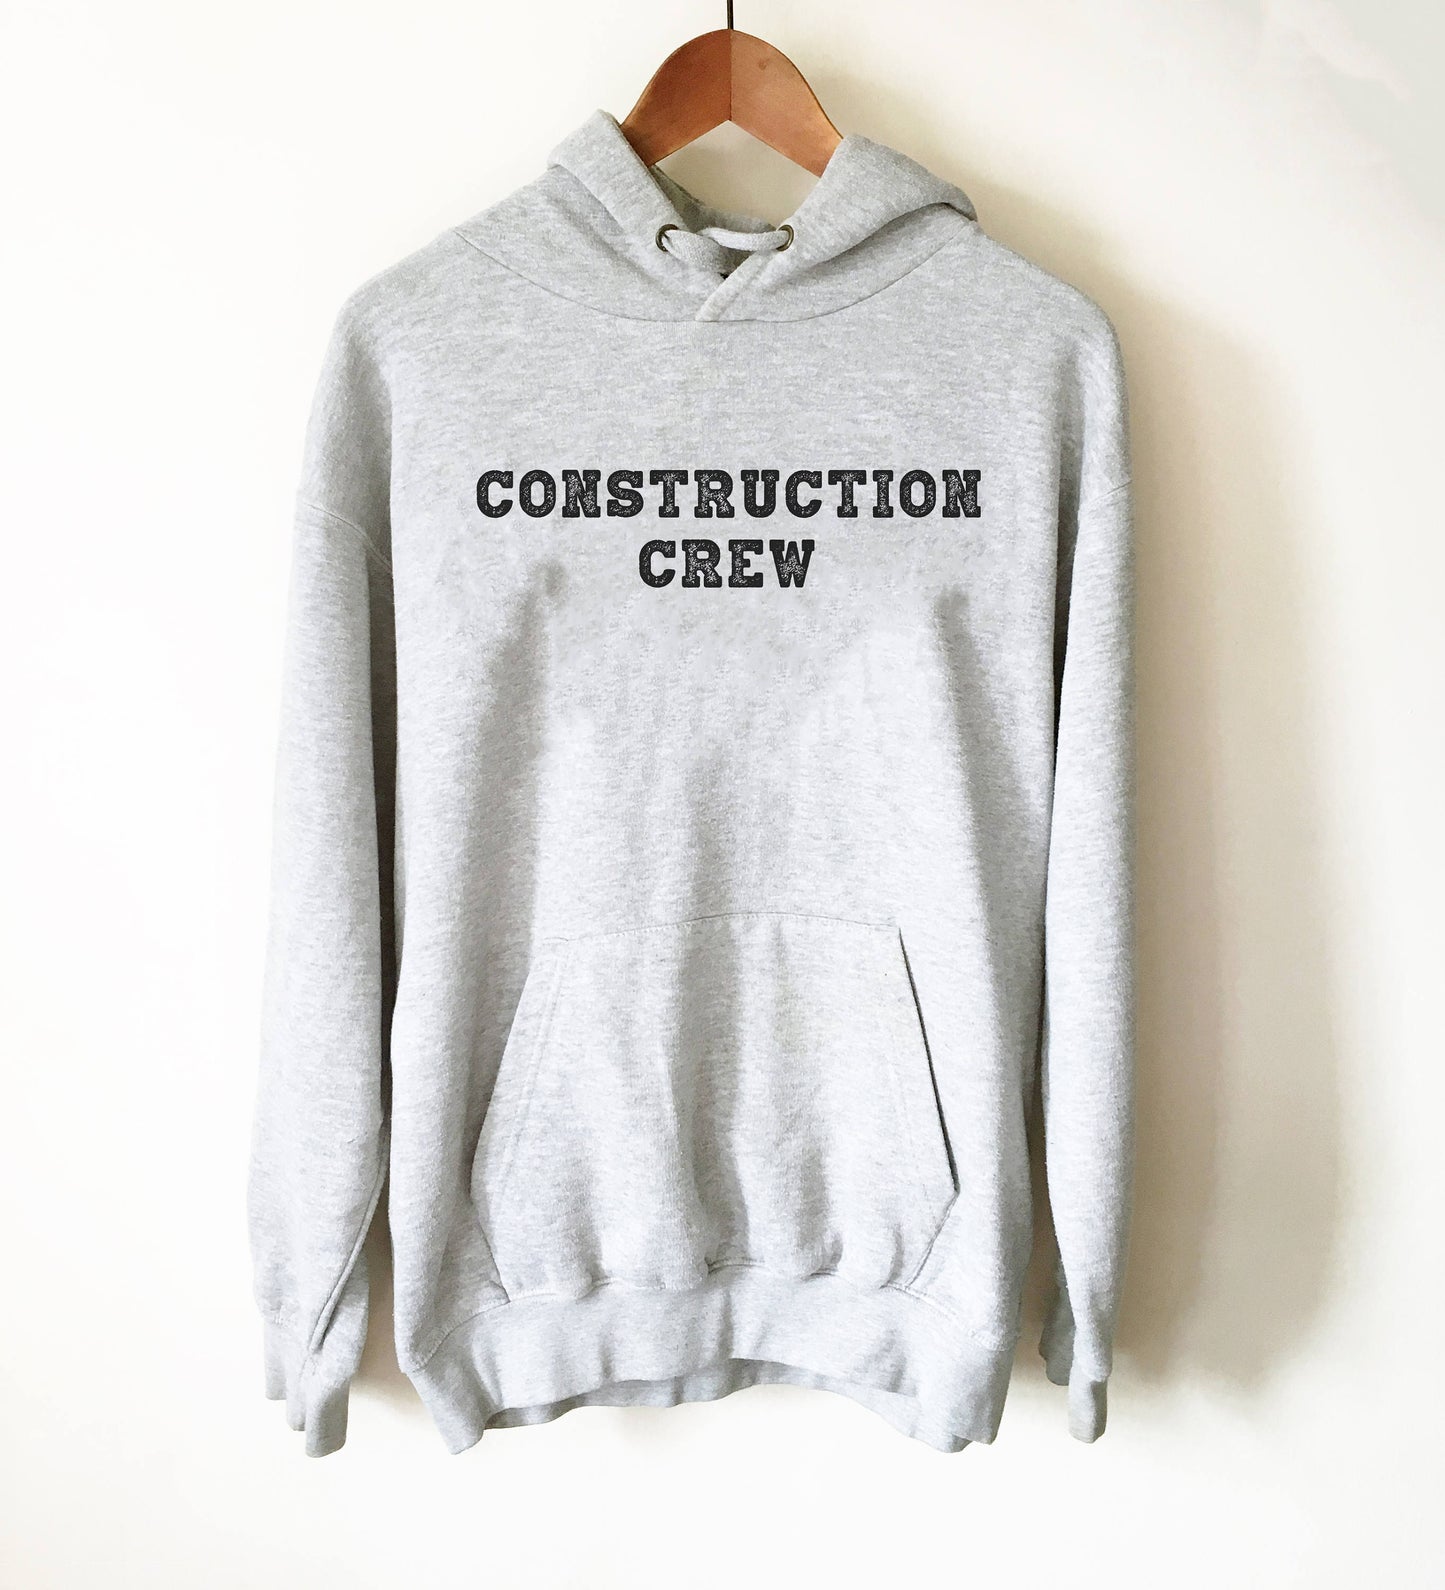 Construction Crew Hoodie - Construction Shirt, Contractor Shirt, Construction Party, Builder Shirt, Fathers Day Shirt, Demolition Shirt